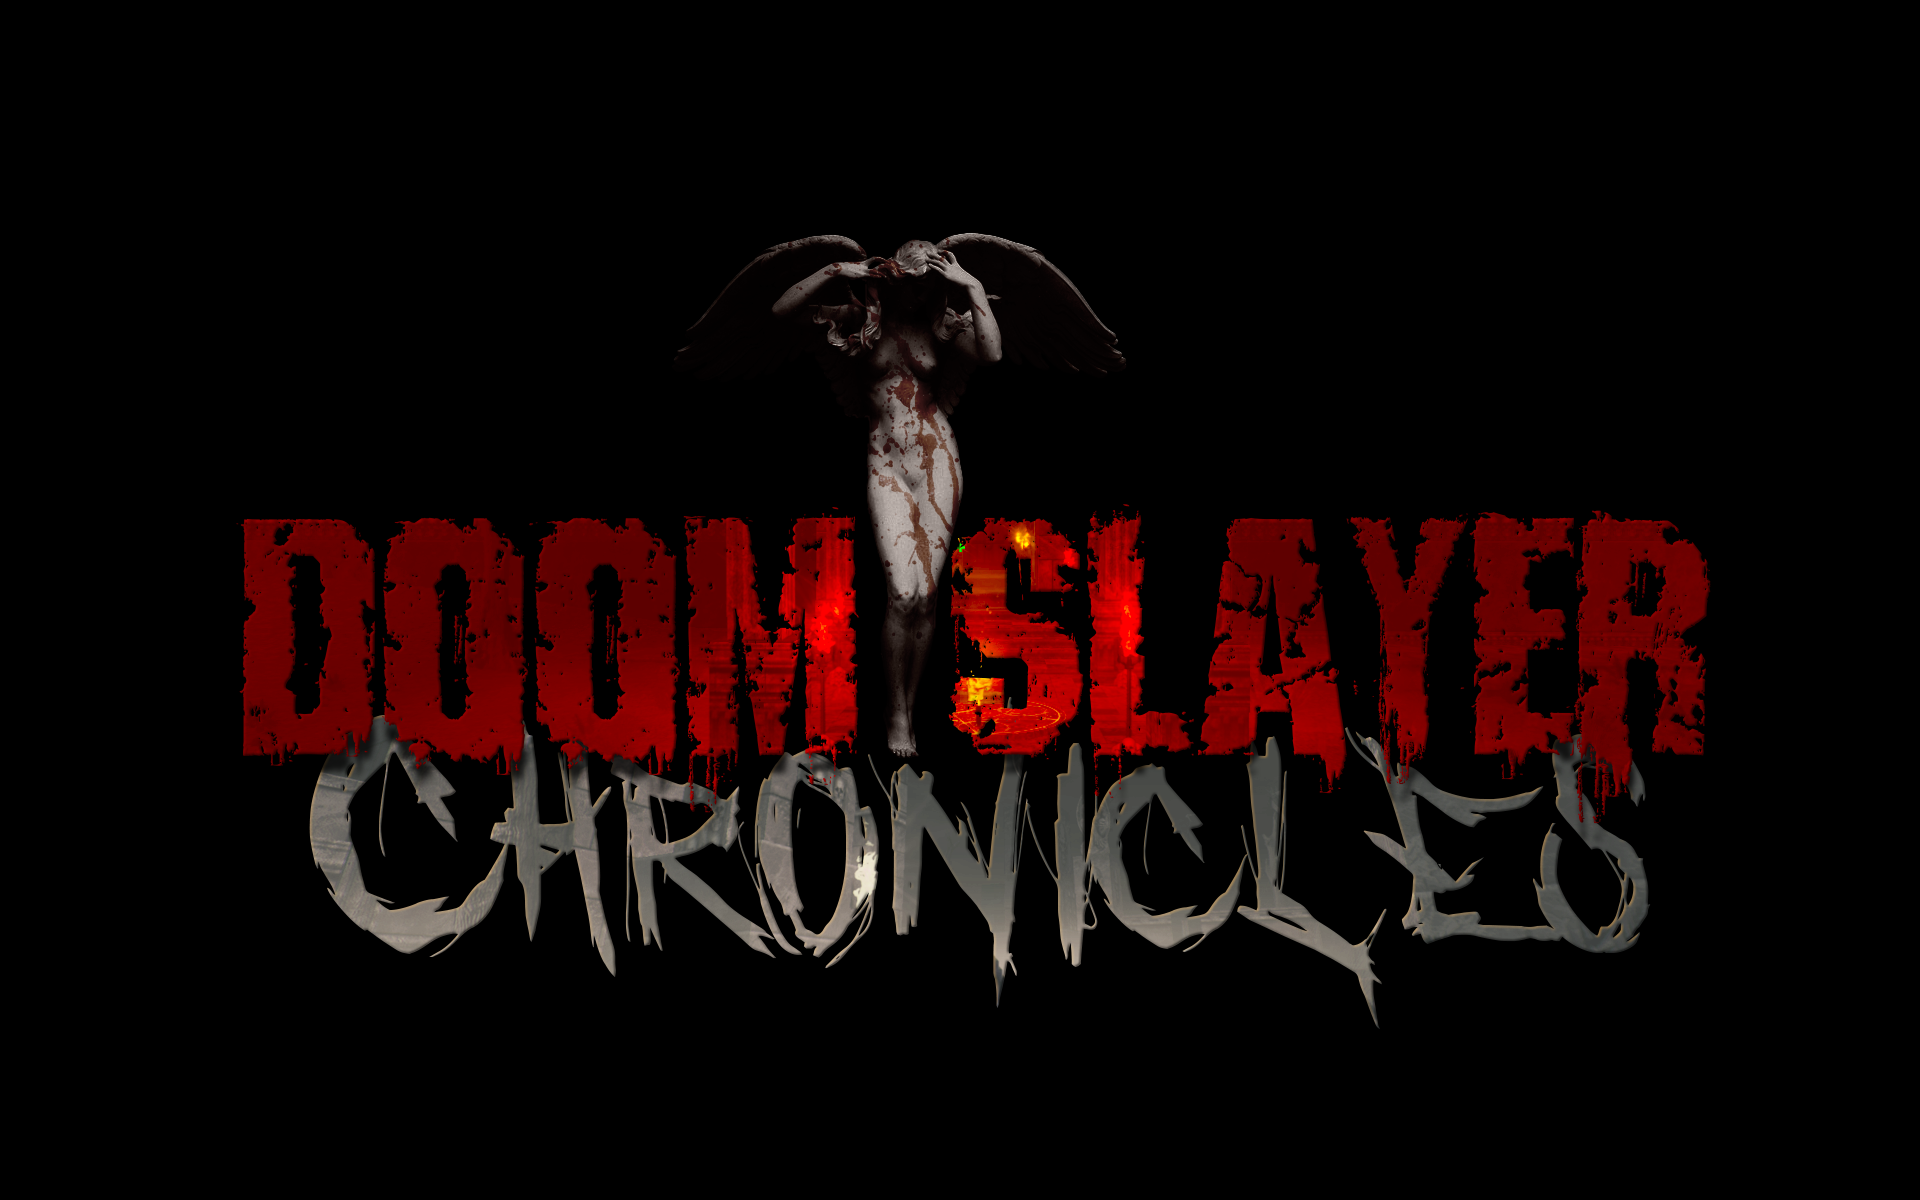 Stillborn Slayer for ios download